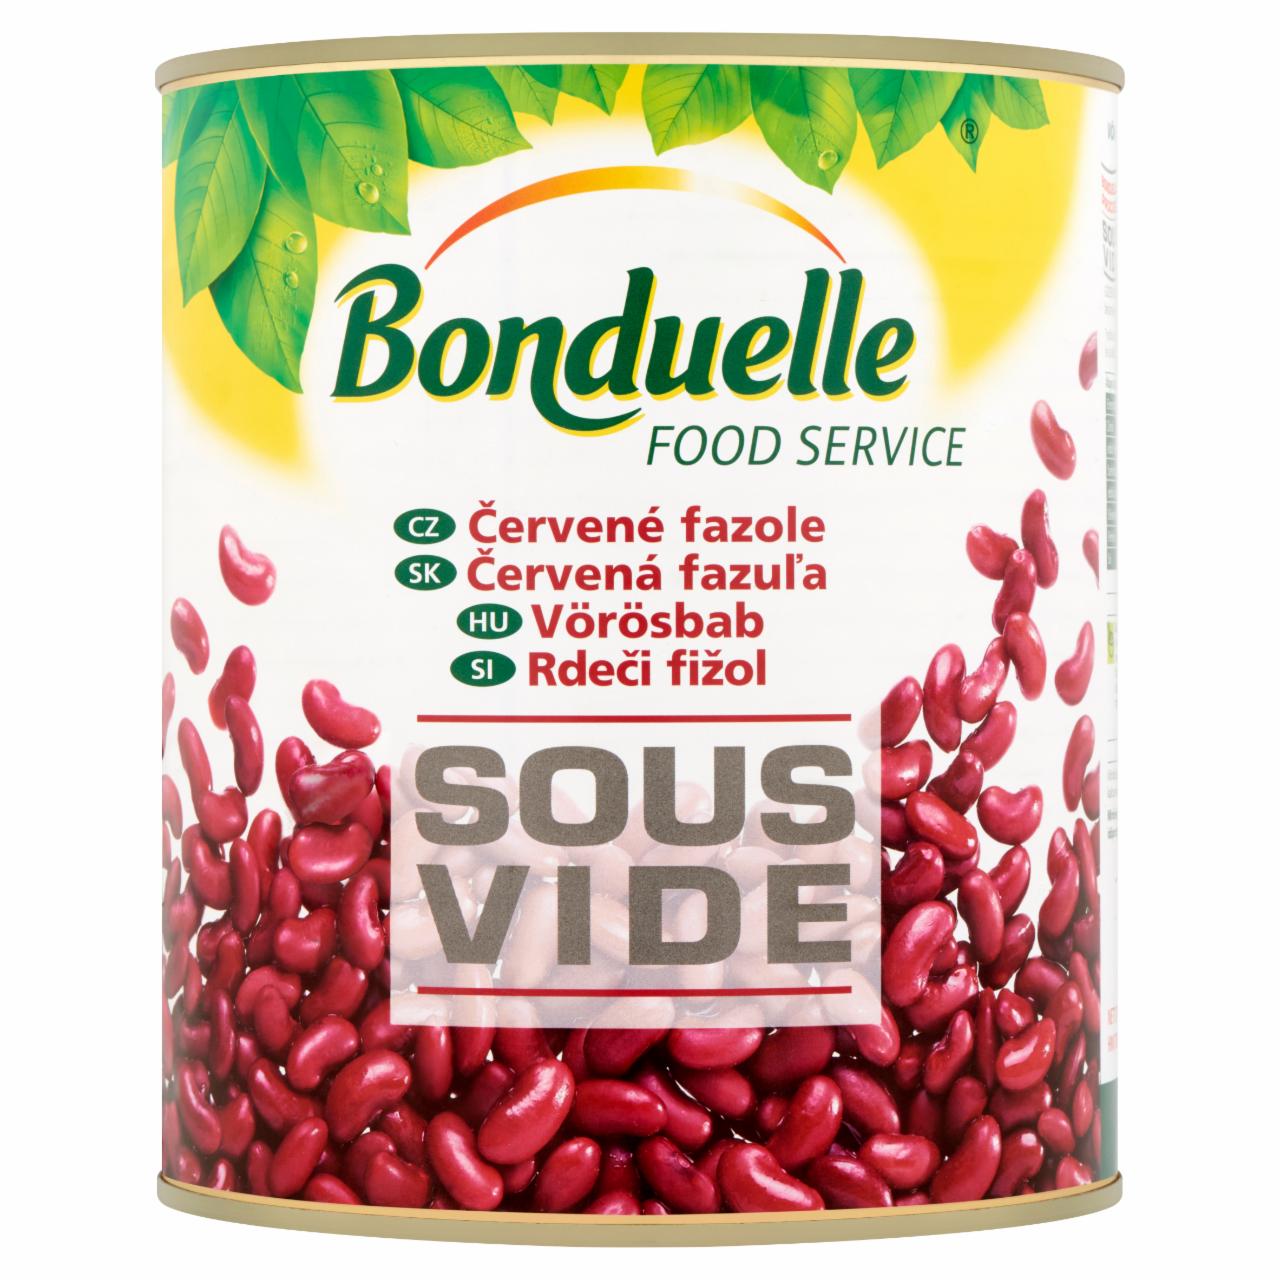 Képek - Bonduelle Food Service Sous Vide vörösbab 2650 g